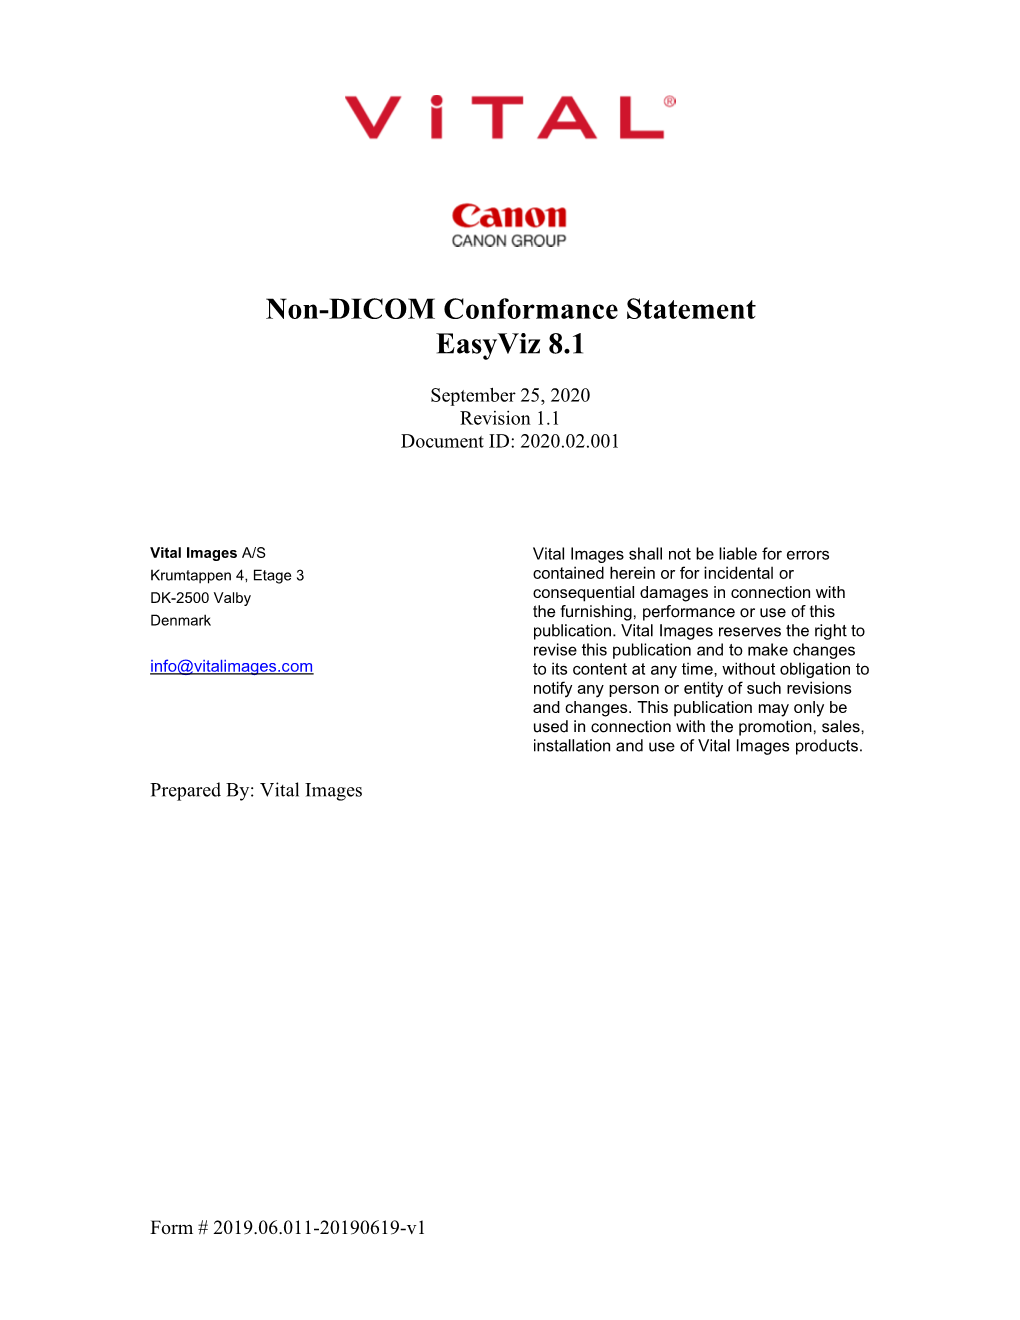 Non-DICOM Conformance Statement Easyviz 8.1